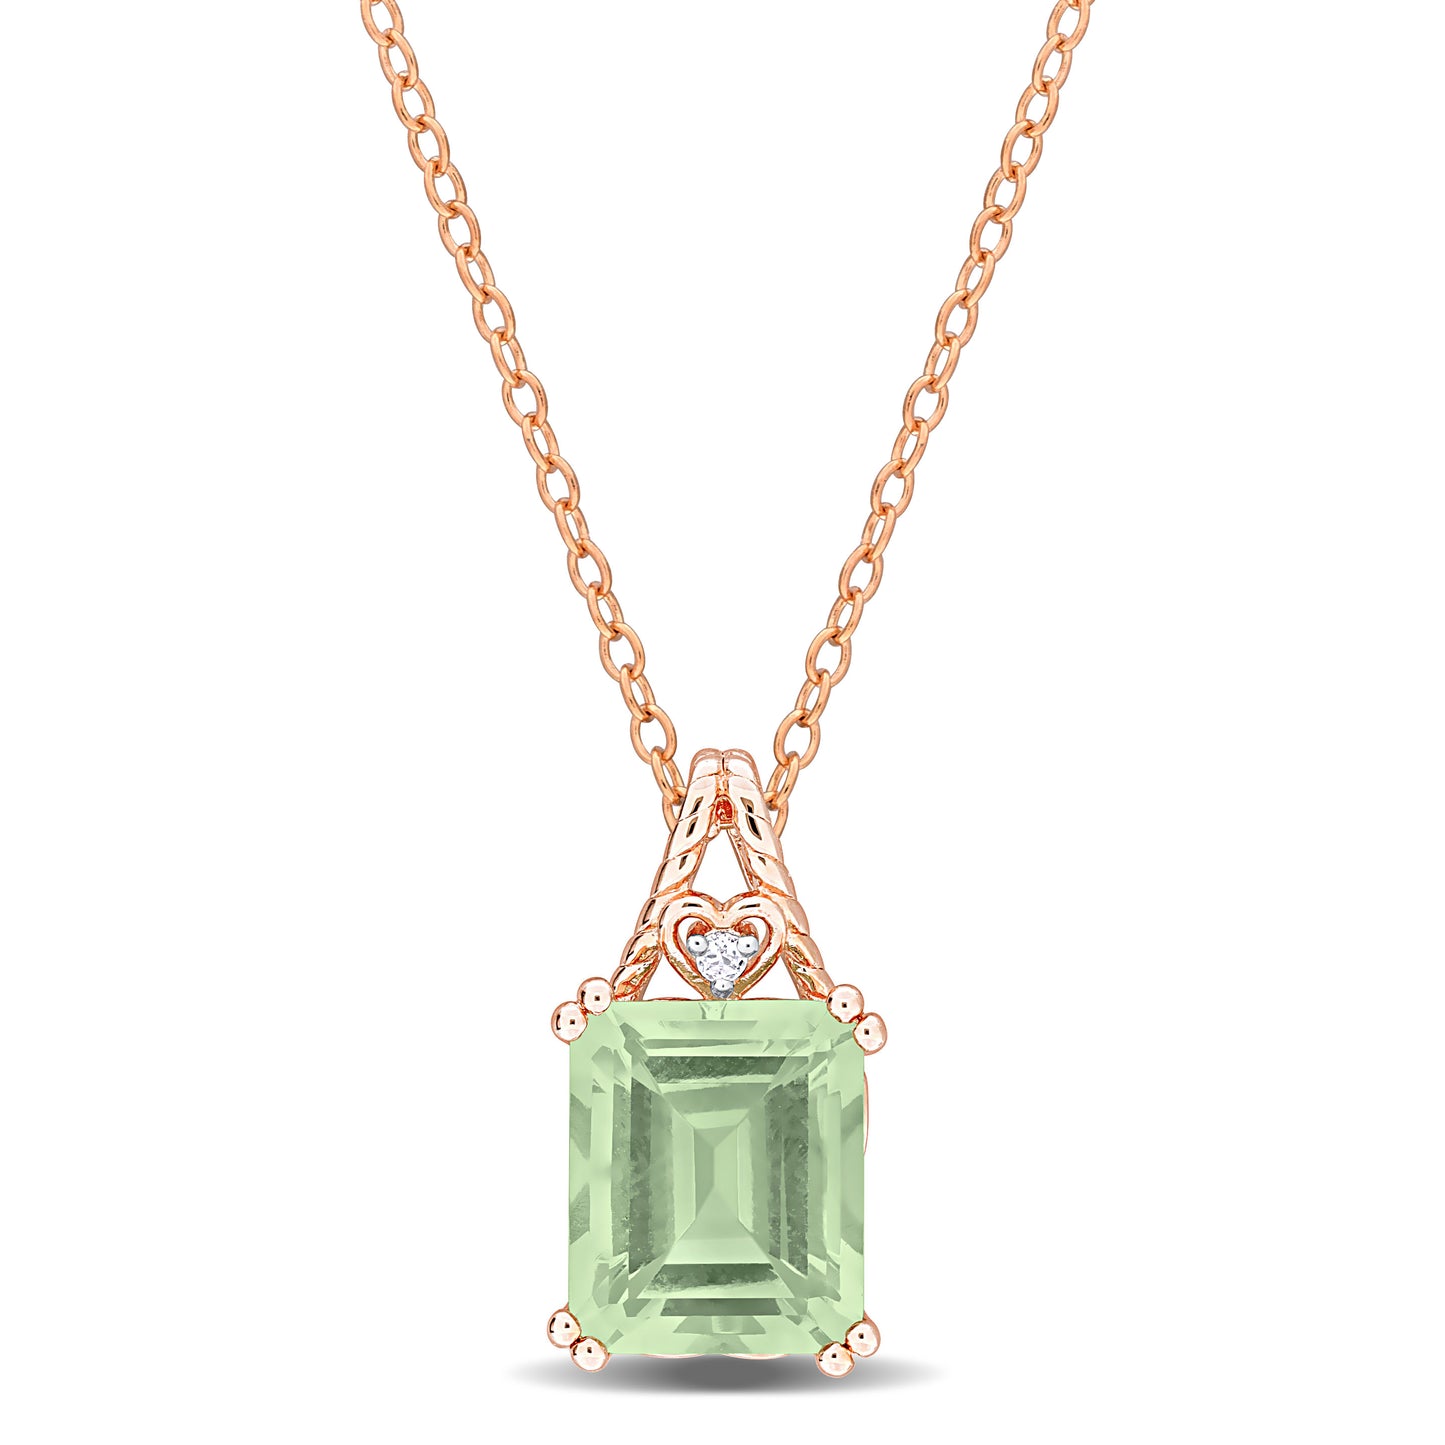 5.6 ct TGW Green quartz white topaz fashion pendant with chain pink silver